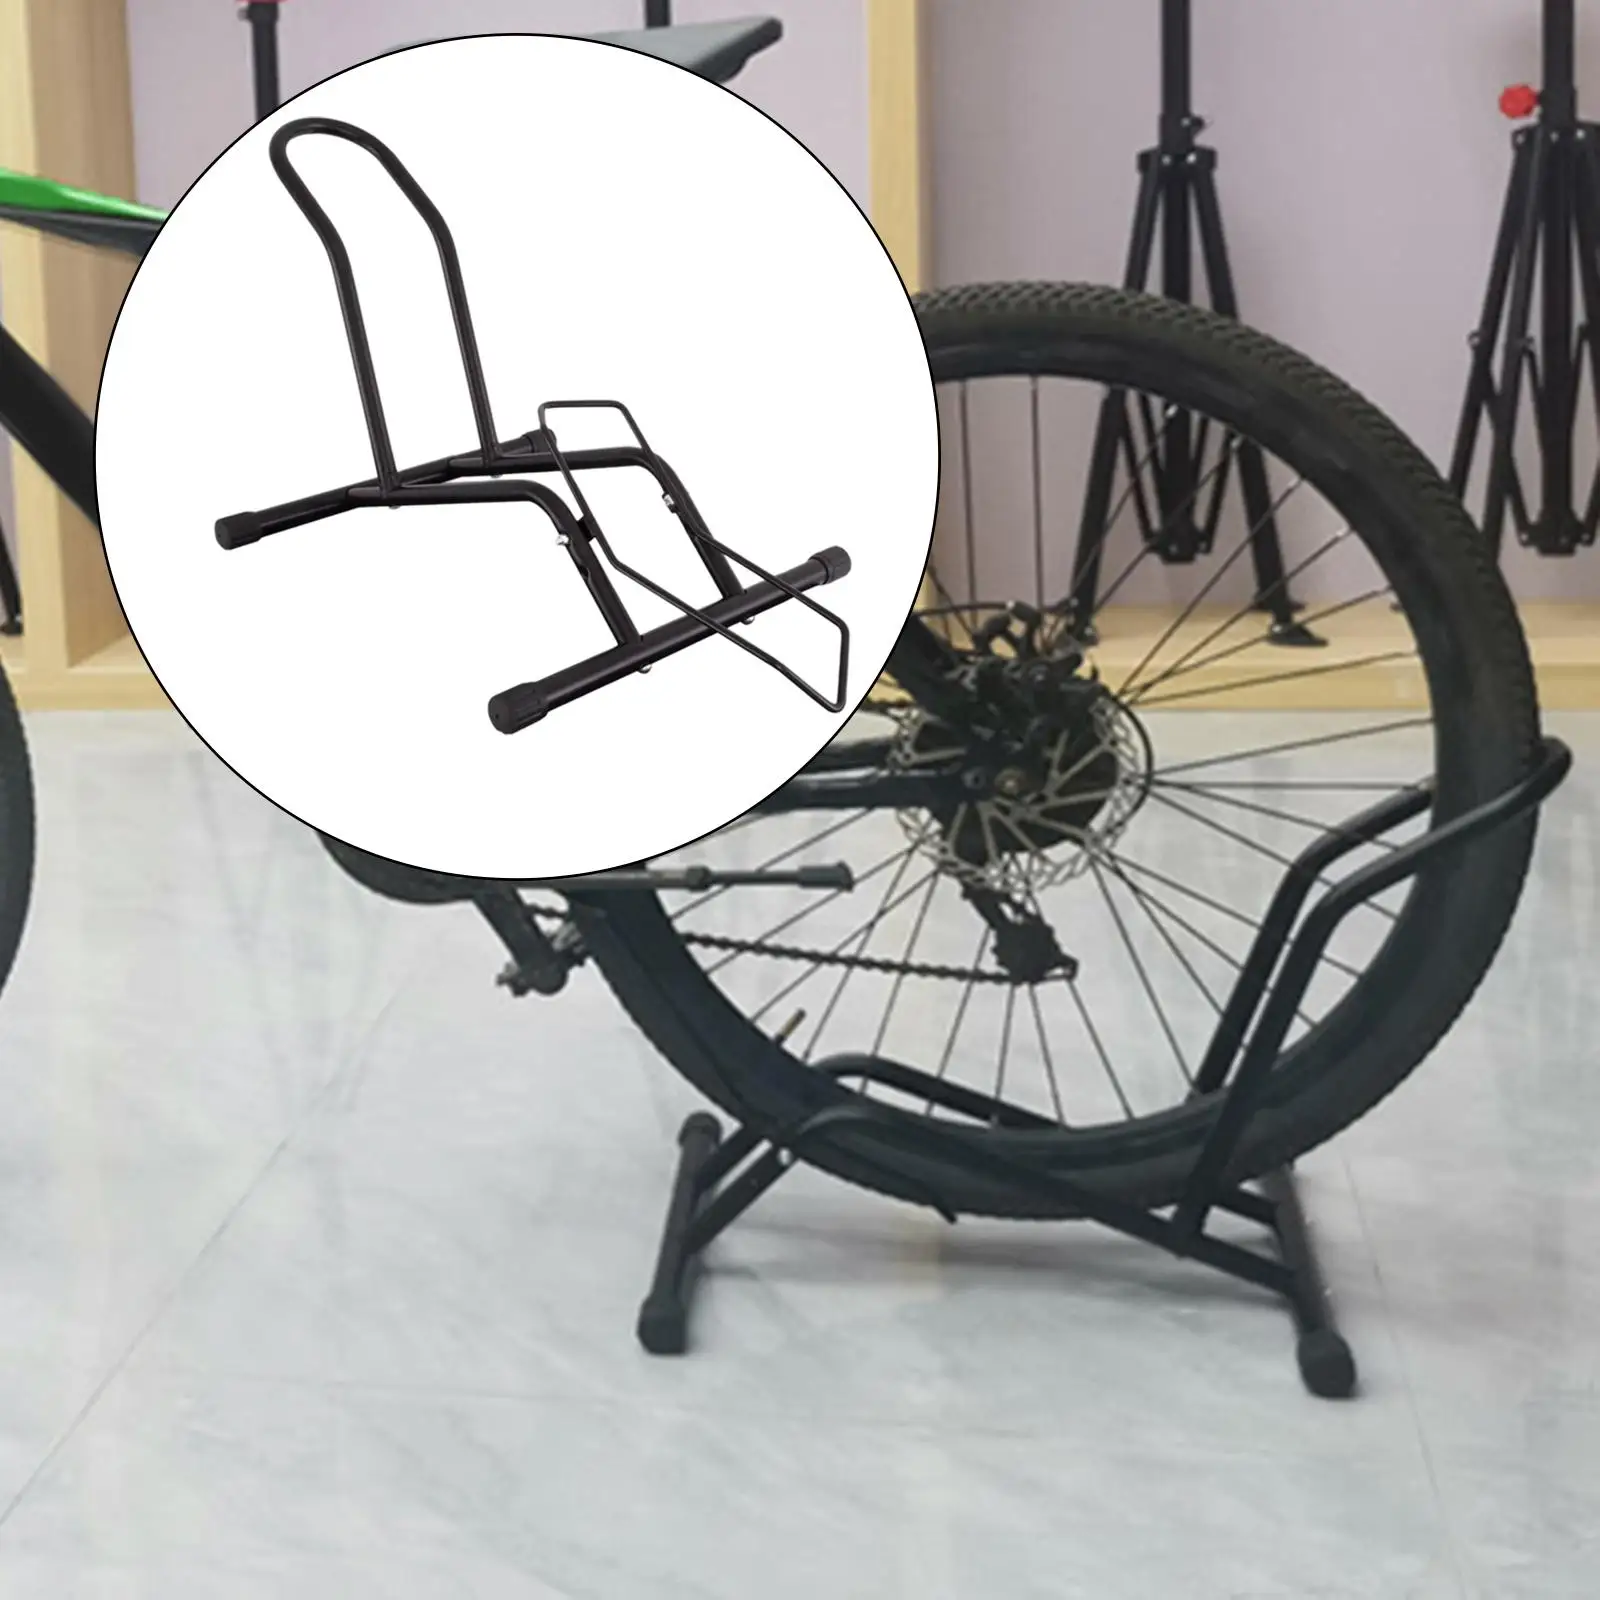 Portable Bicycle Floor Parking Rack Storage Stand Bike Holder for MTB Road Bike Indoor Outdoor